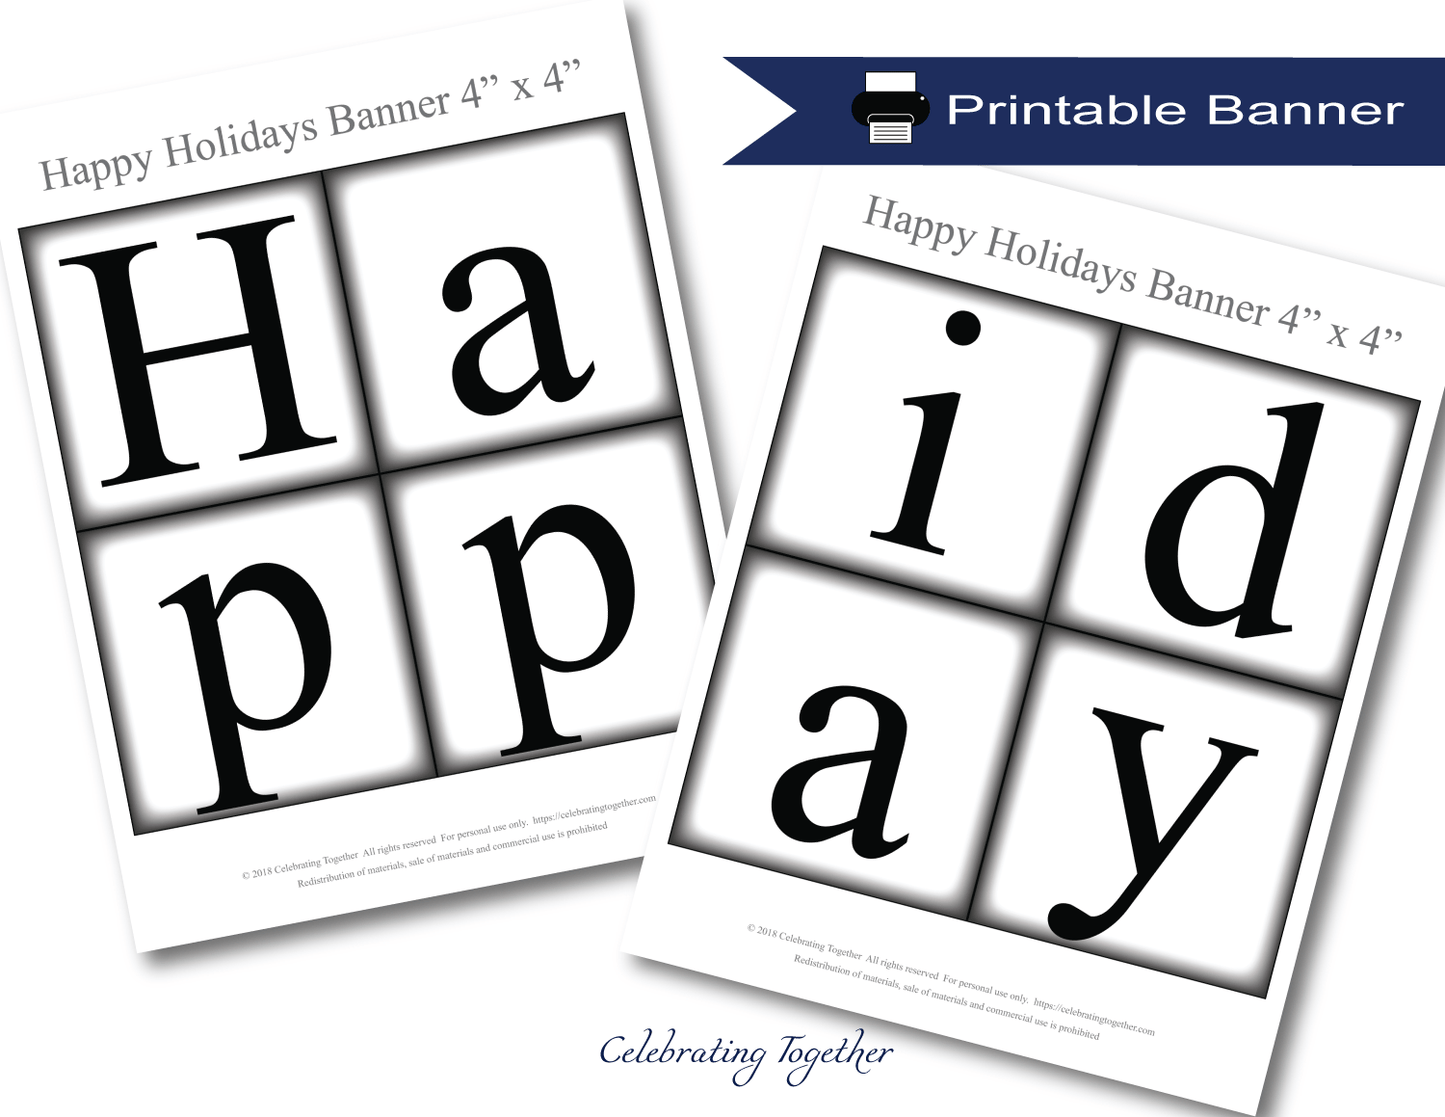 Printable happy holidays banner - DIY Christmas decor - Celebrating Together